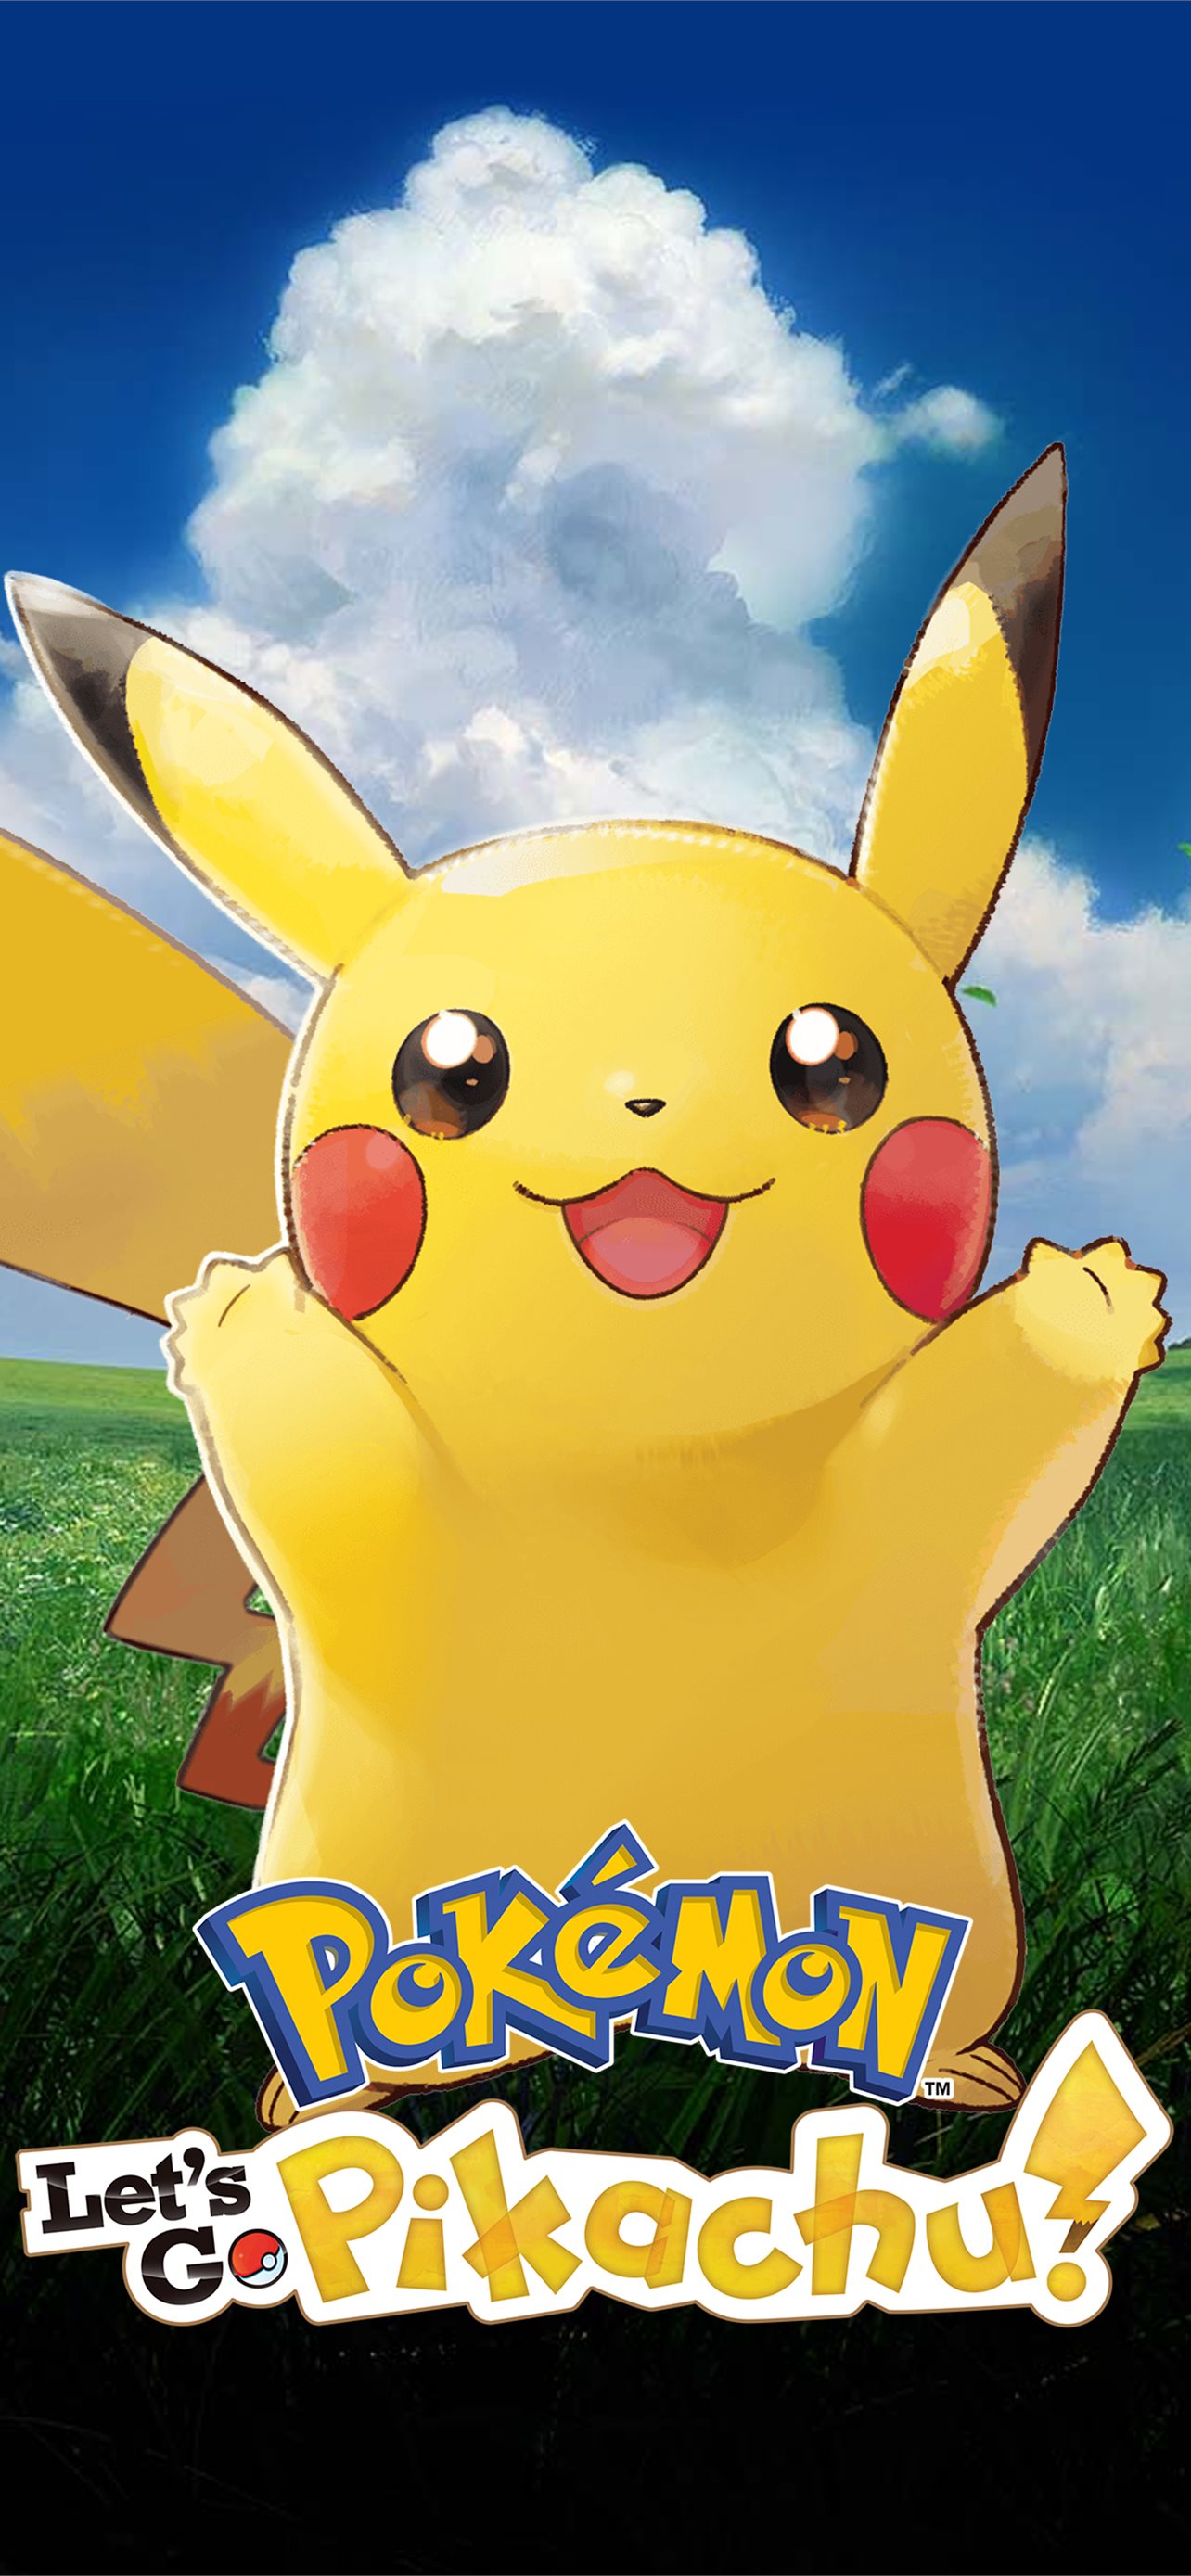 pokemon go iPhone Wallpaper Free Download